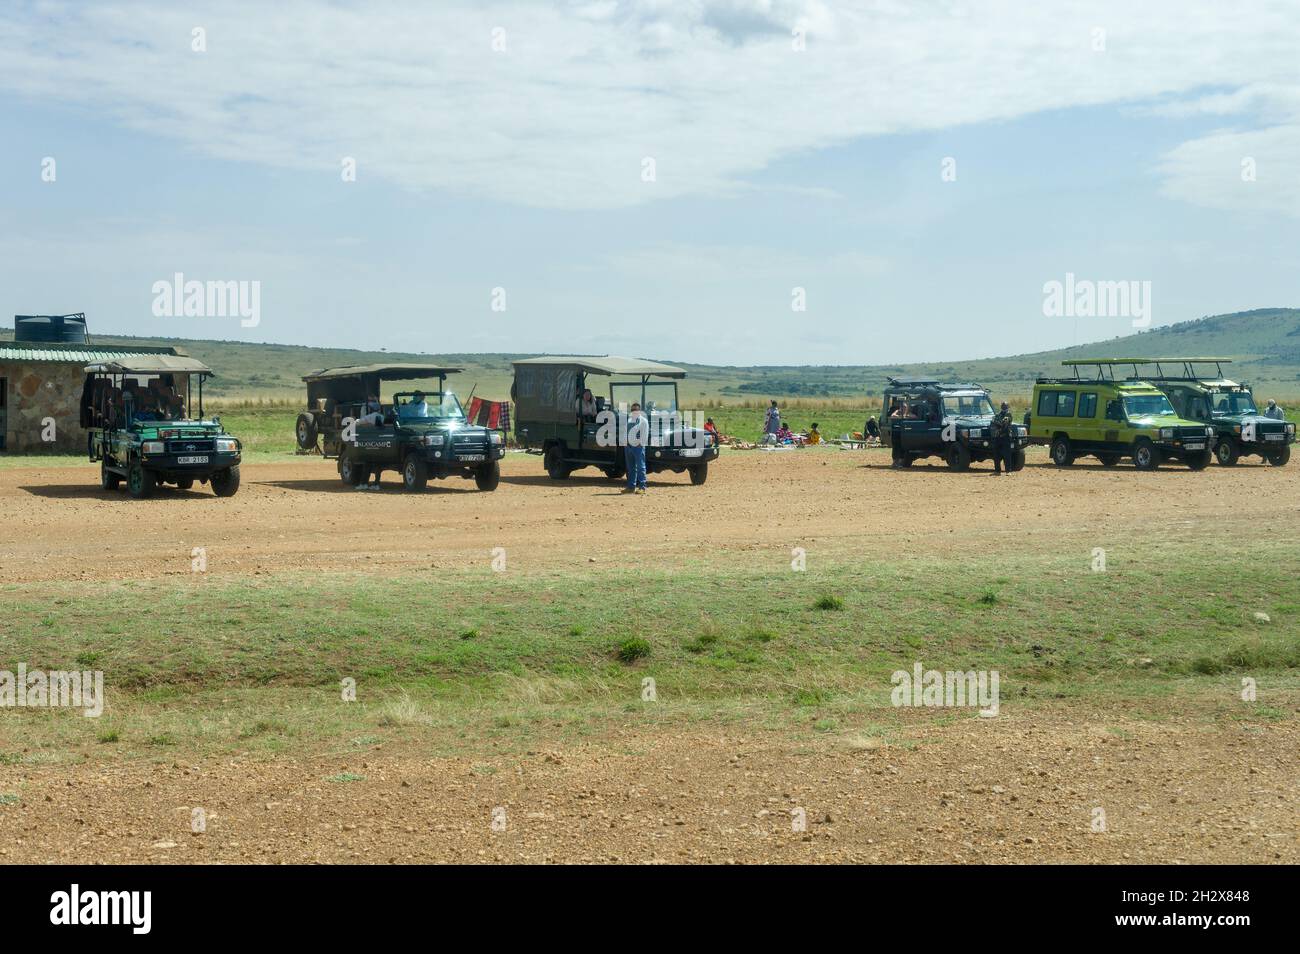 A row of 4x4 vehicles waiting for incoming tourists arriving at Keekorok airstrip, Masai Mara, Kenya Stock Photo